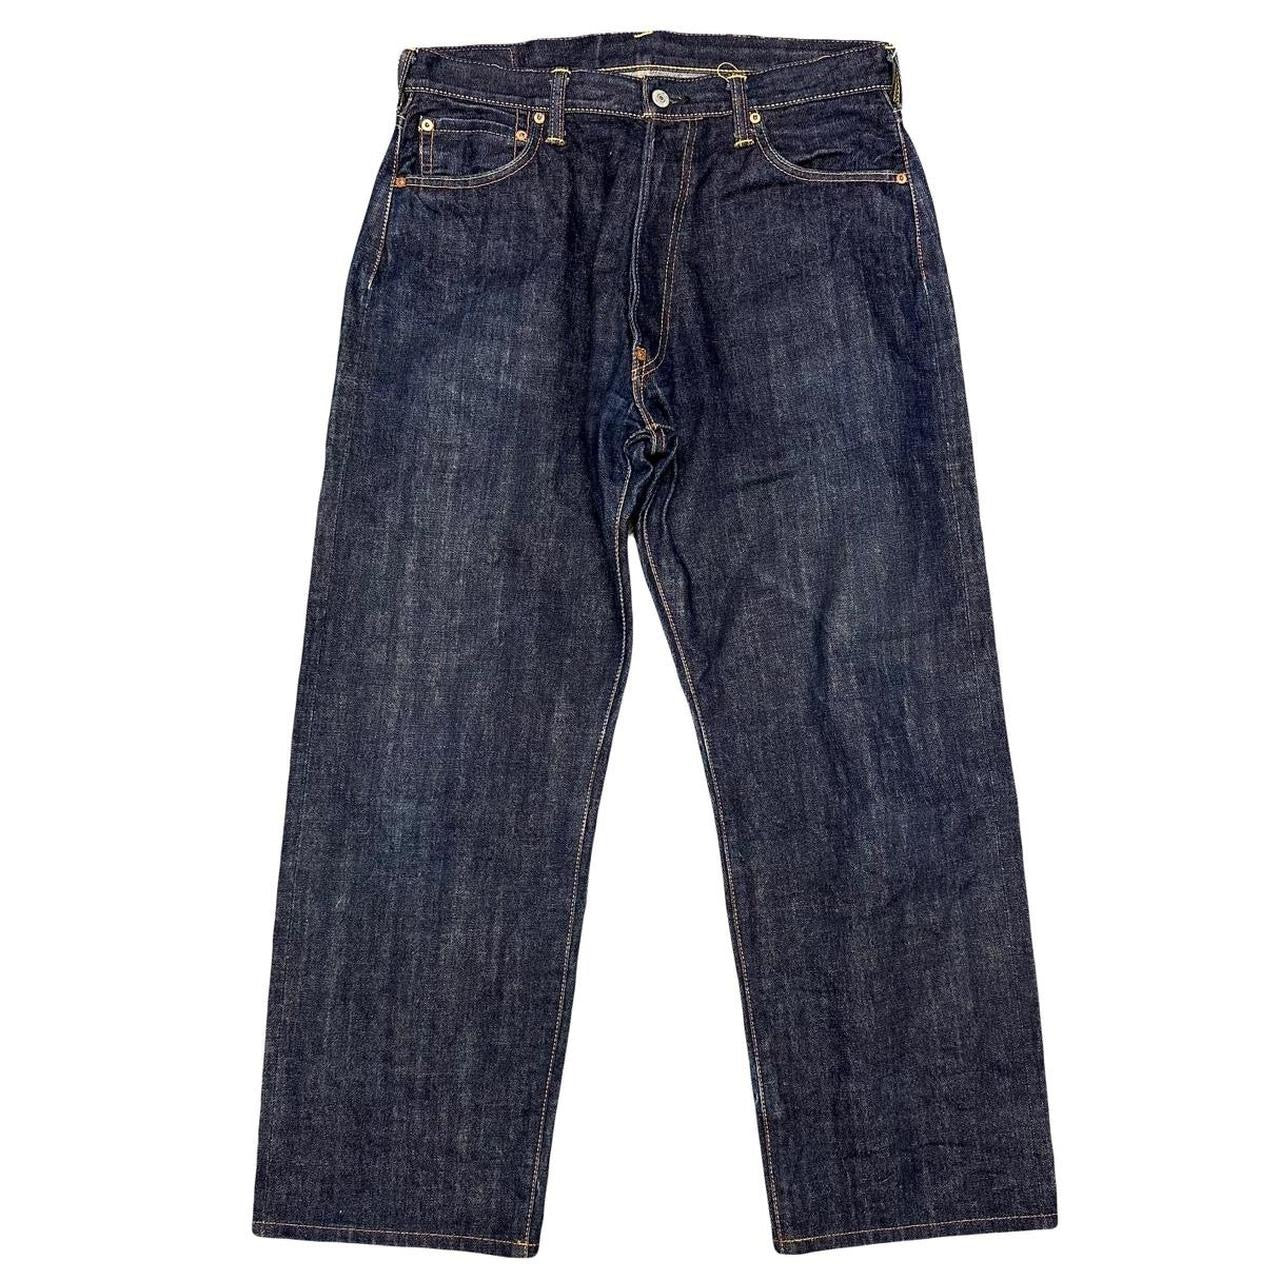 Evisu Selvedge Jeans With Mighty Evisu Daicock ( W34 )